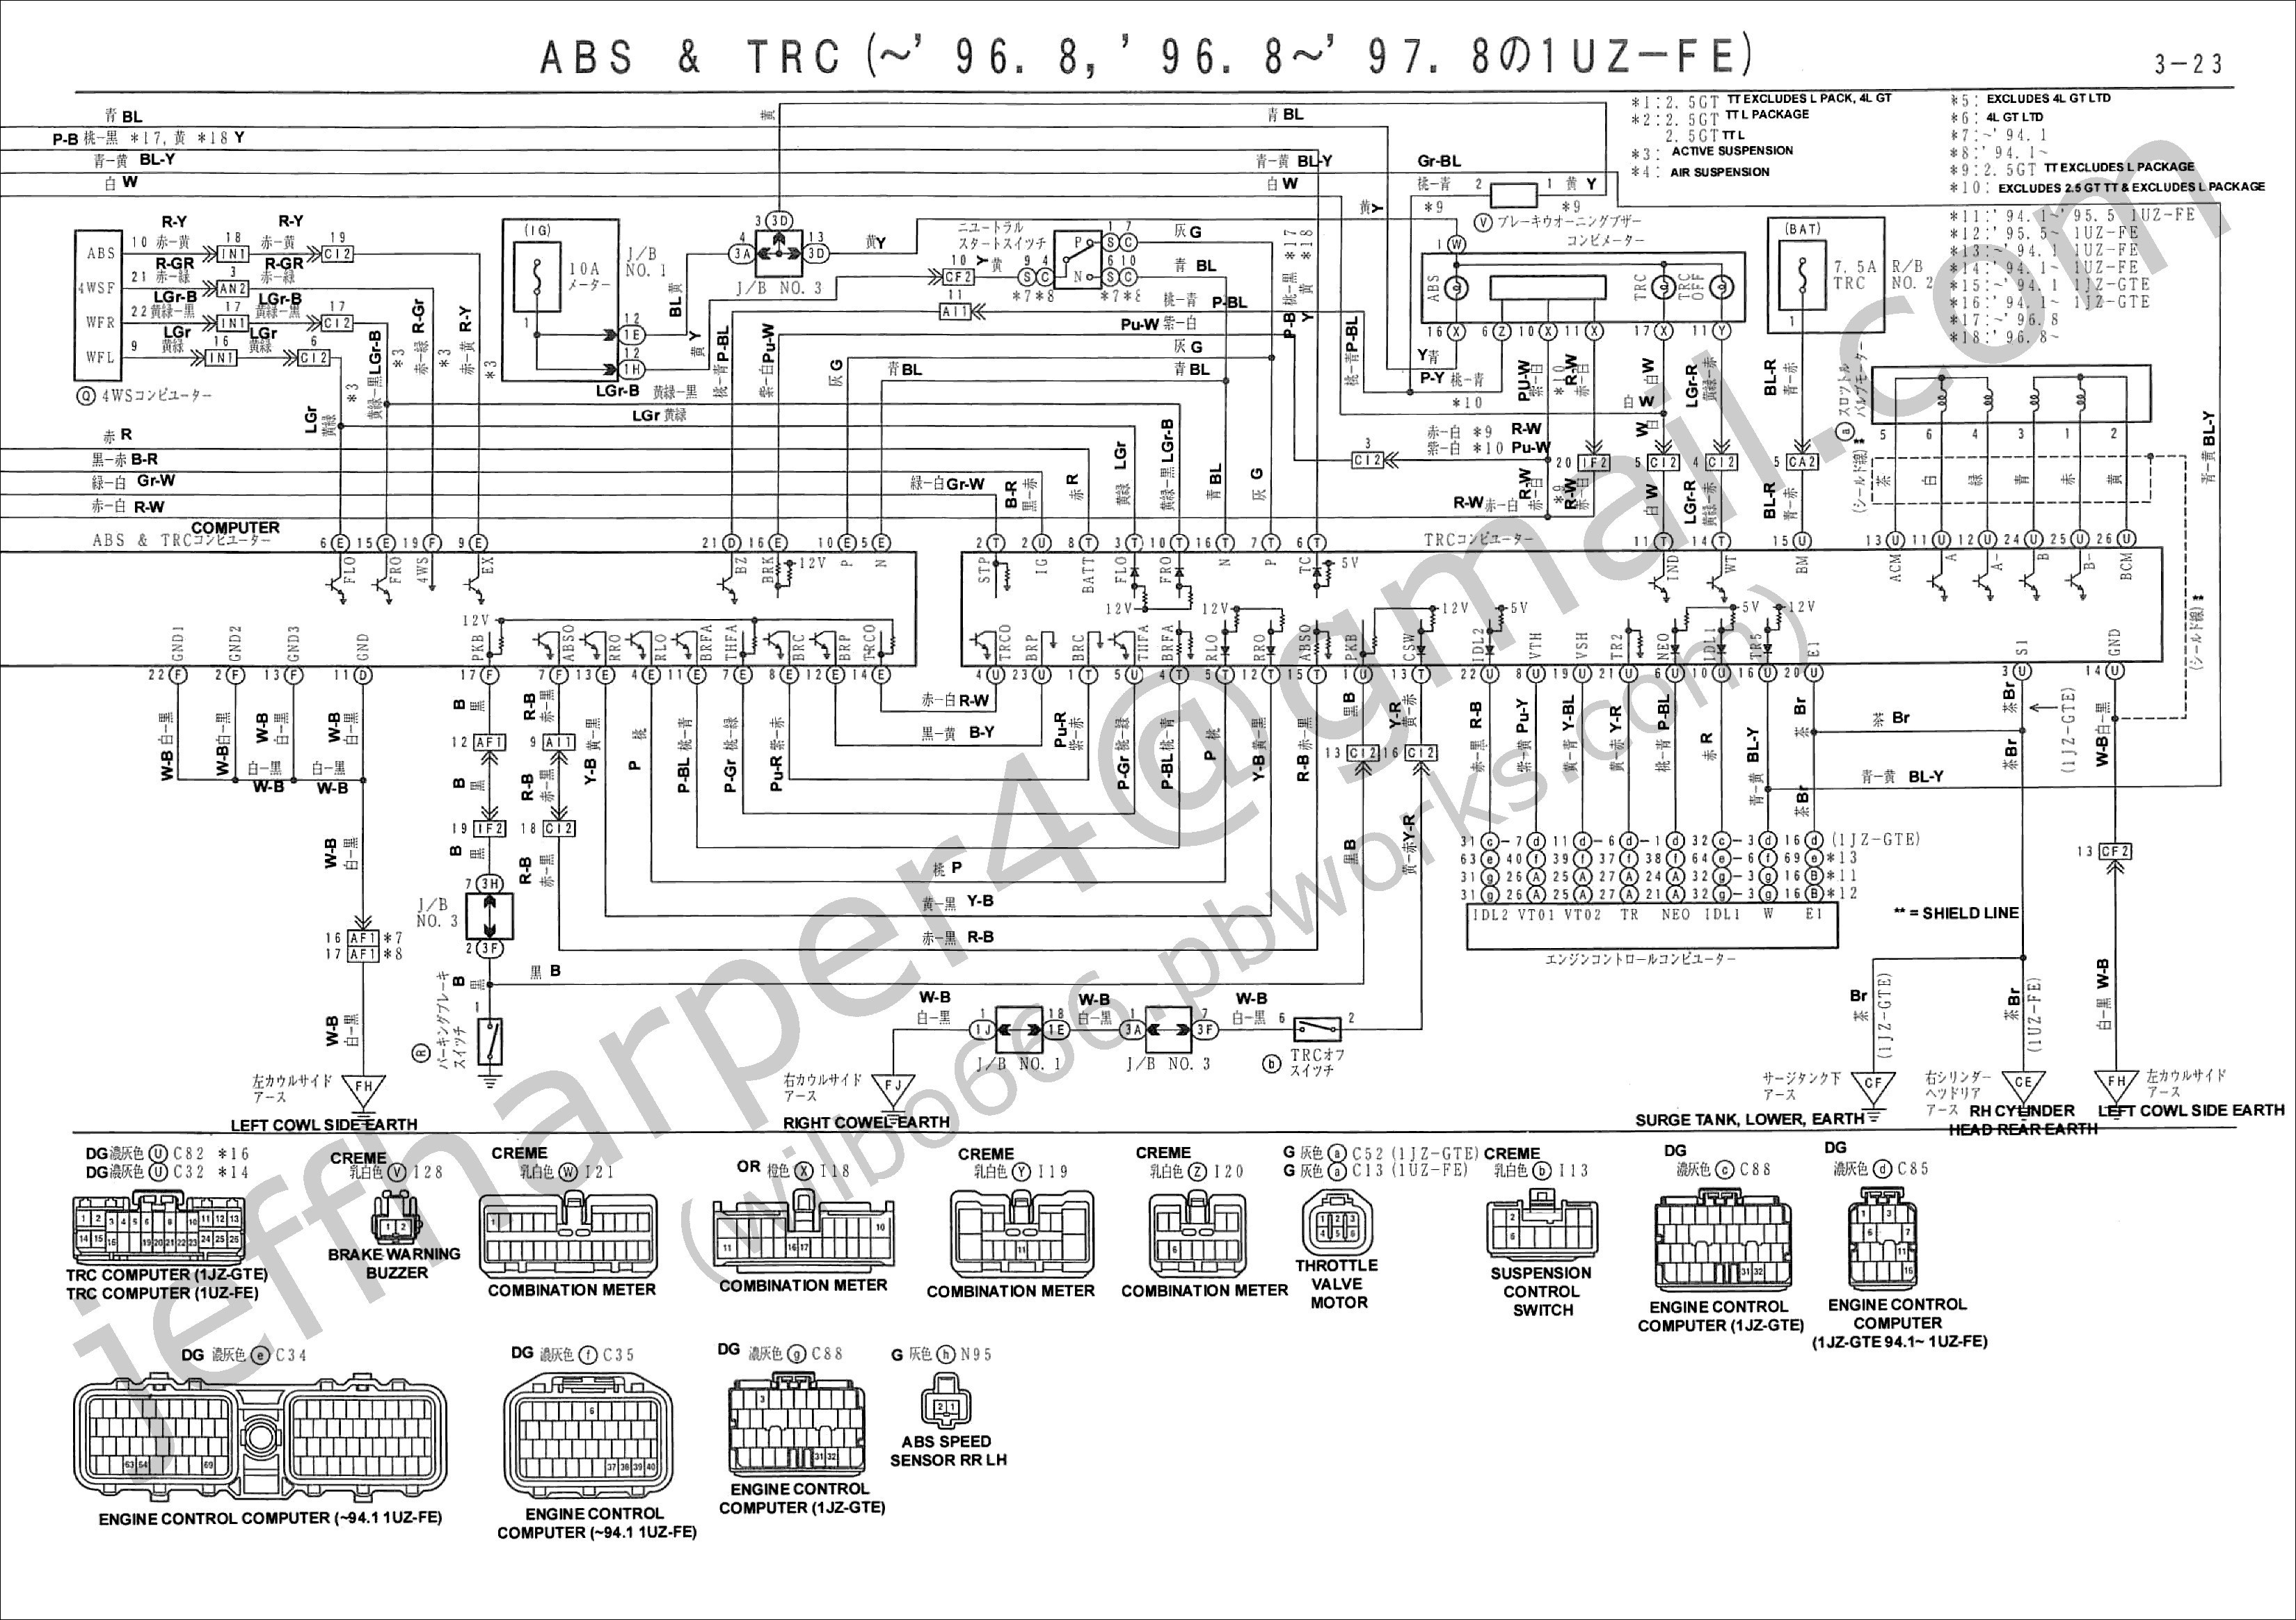 Electrical Wiring Diagrams for Dummies Electrical Block Diagram originalstylophone Of Electrical Wiring Diagrams for Dummies